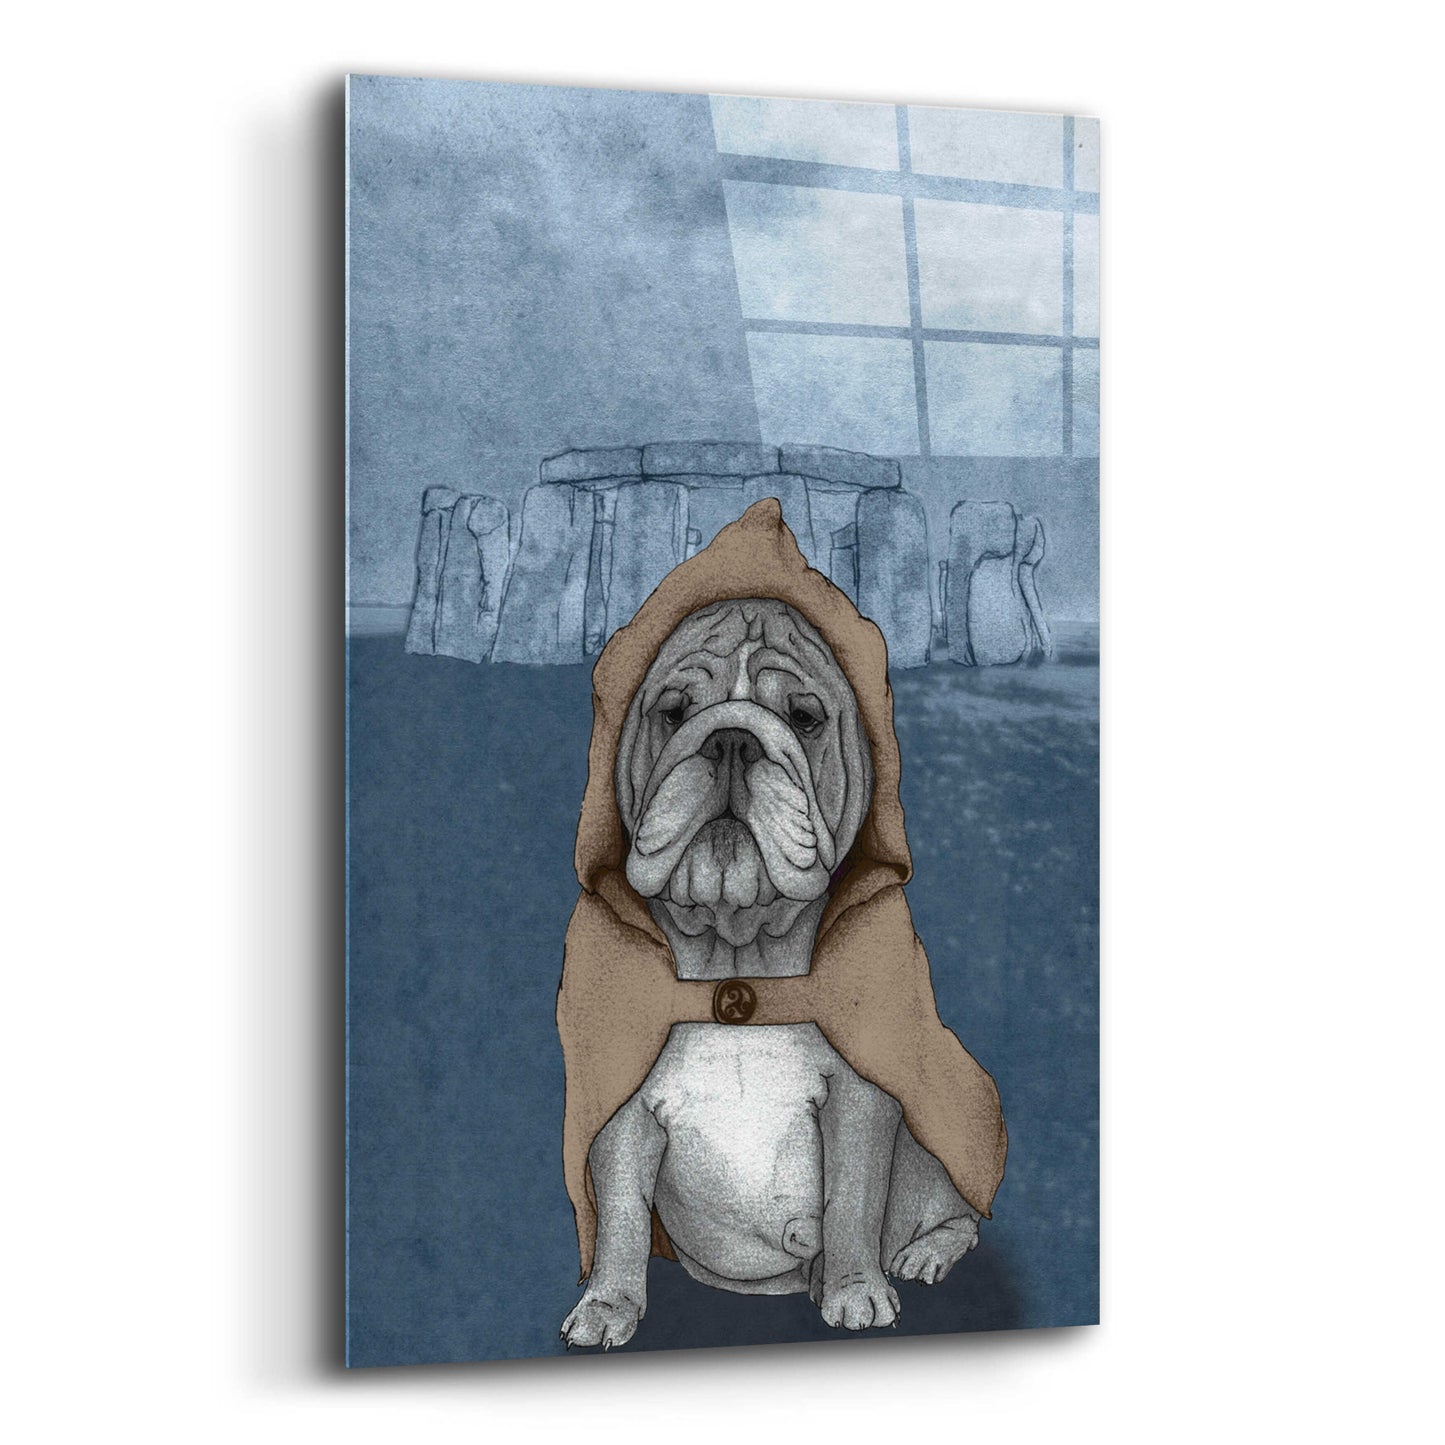 Epic Art 'English Bulldog with Stonehenge' by Barruf Acrylic Glass Wall Art,12x16